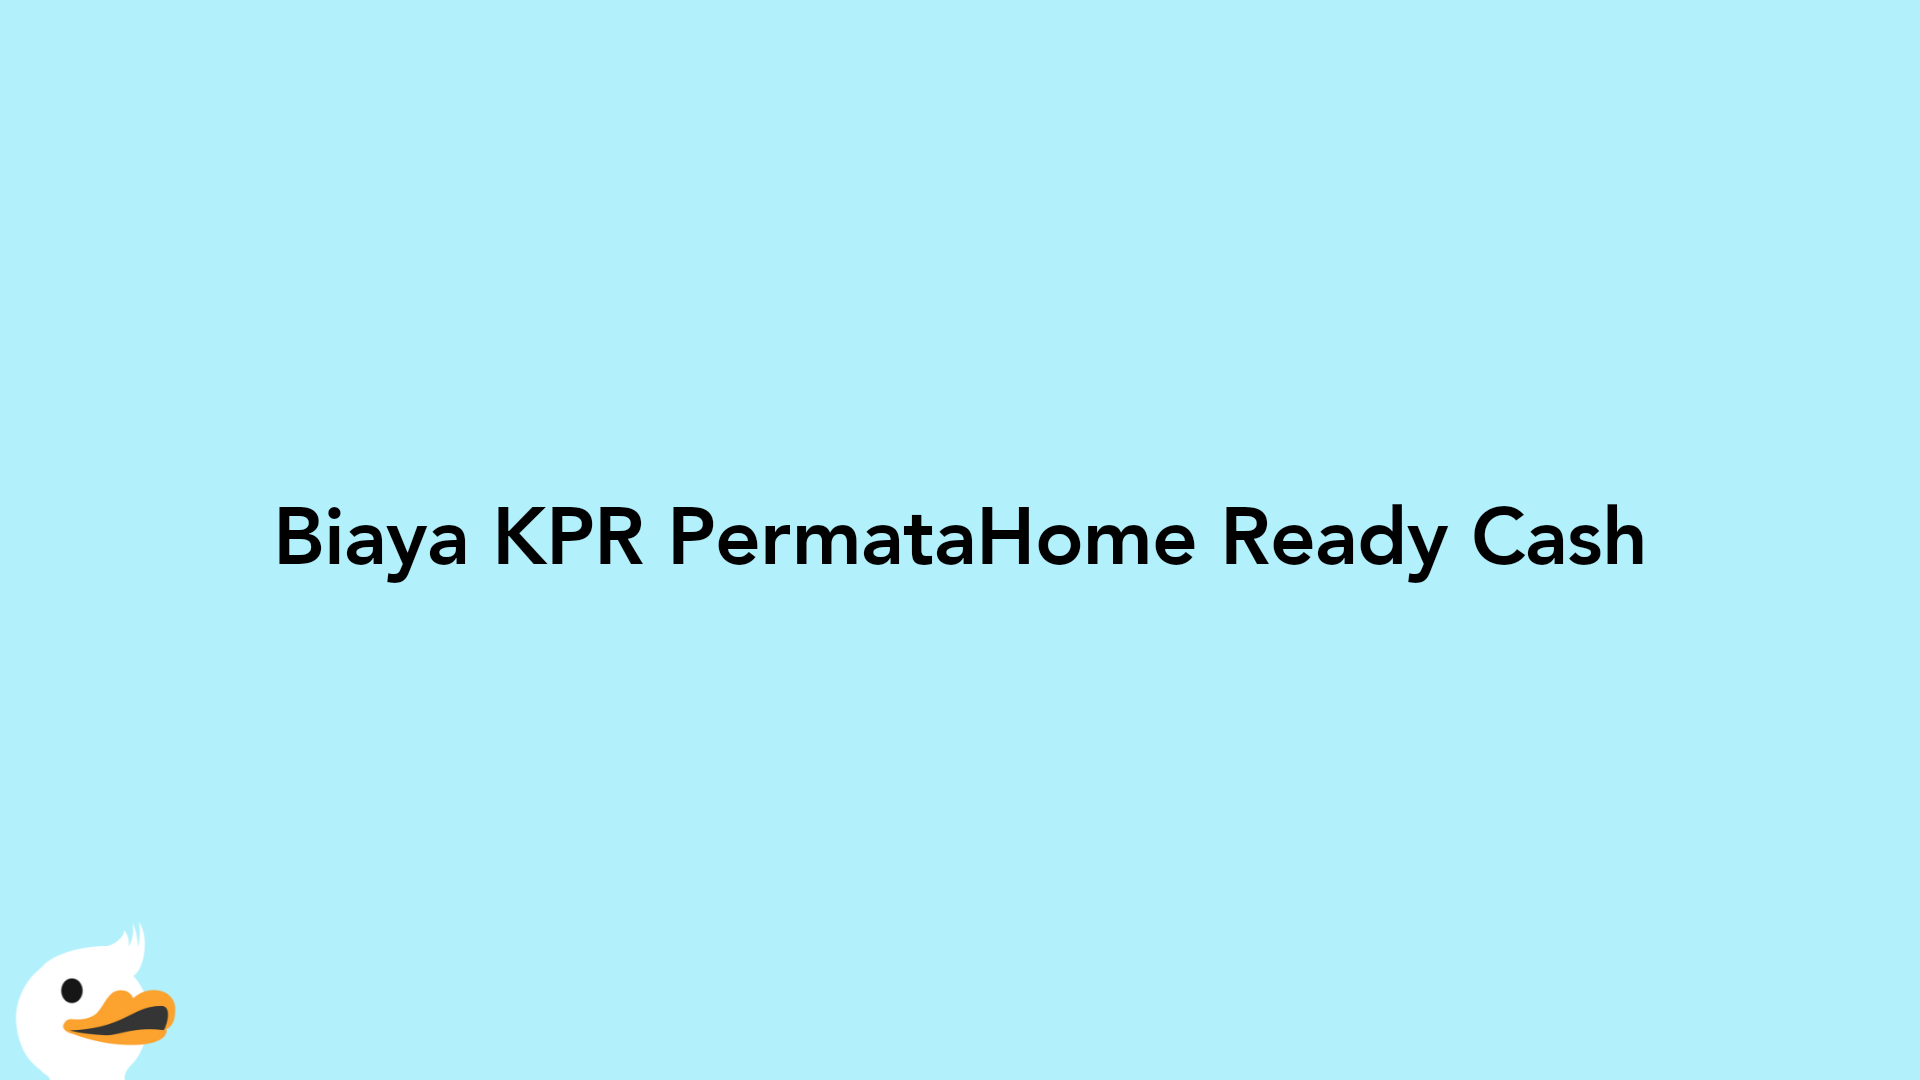 Biaya KPR PermataHome Ready Cash